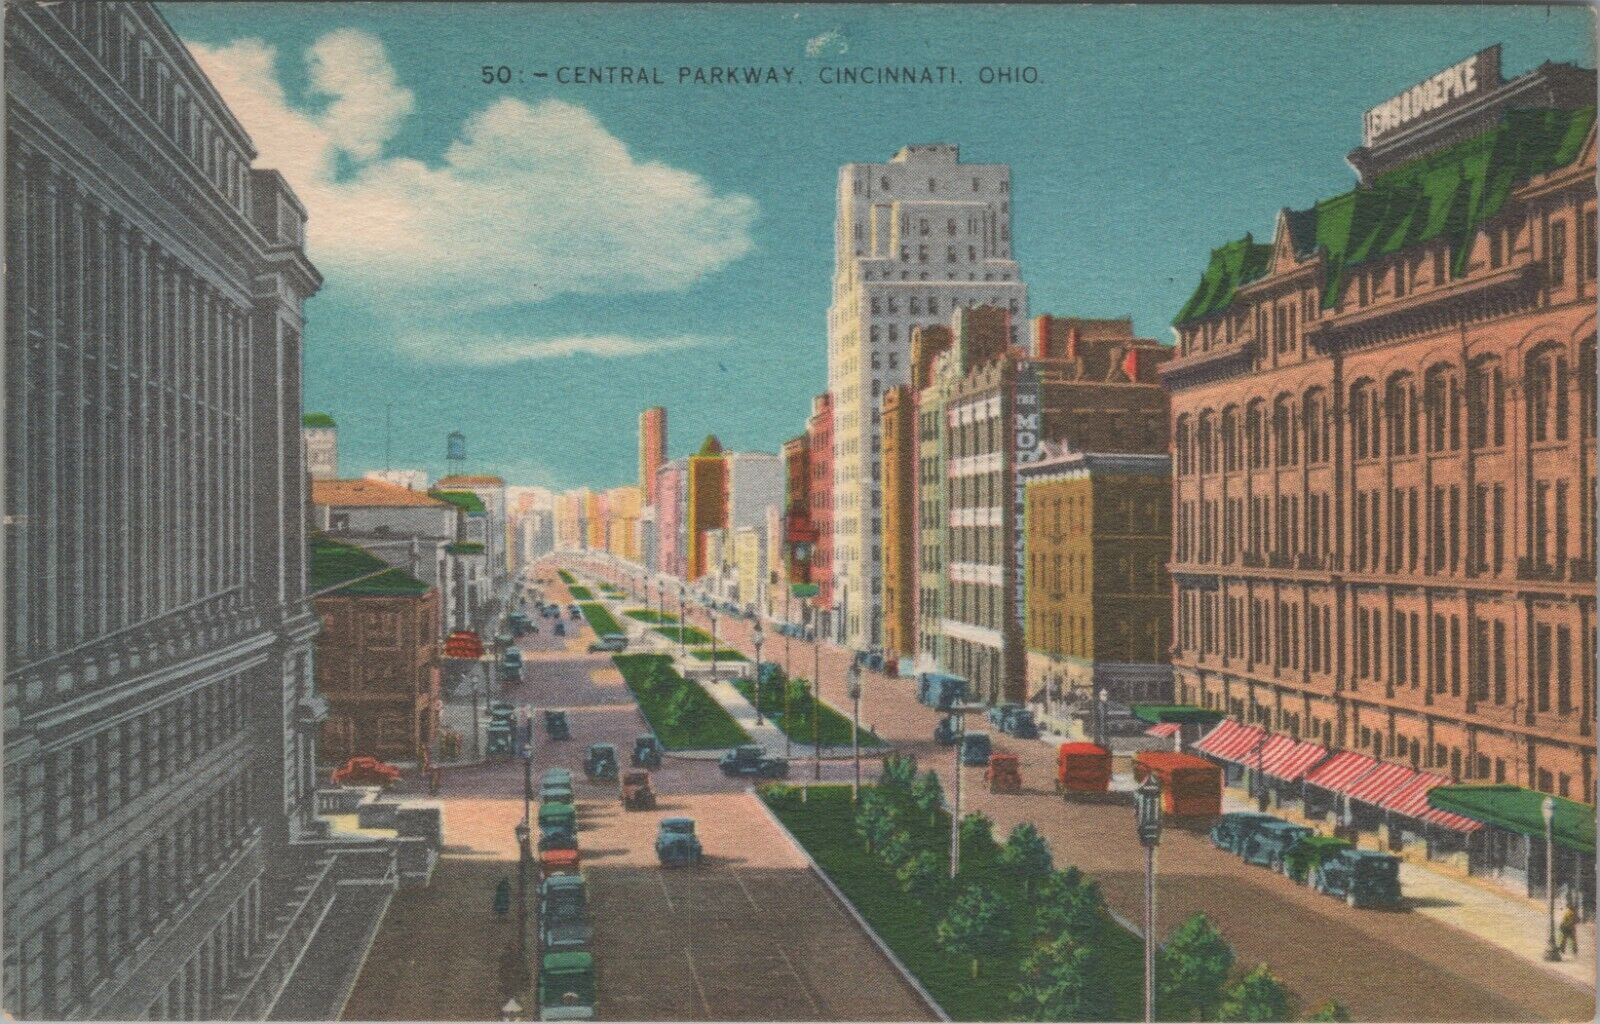 1940s Central Parkway Cincinnati Ohio Alms Doepke store aerial postcard F108